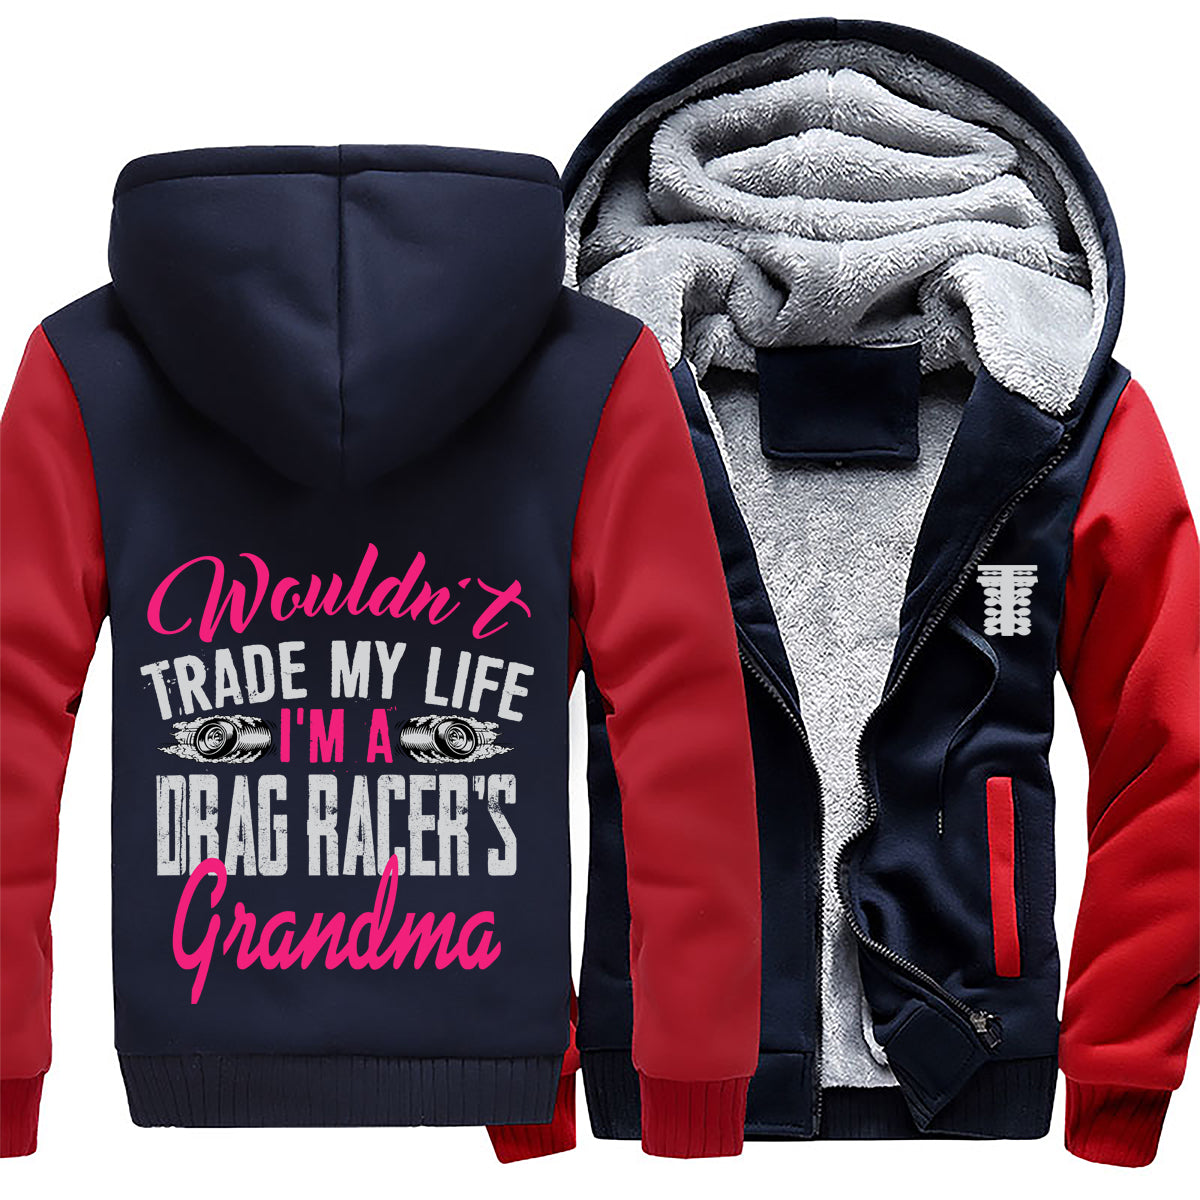 I'm A Drag Racer's Grandma Jacket 